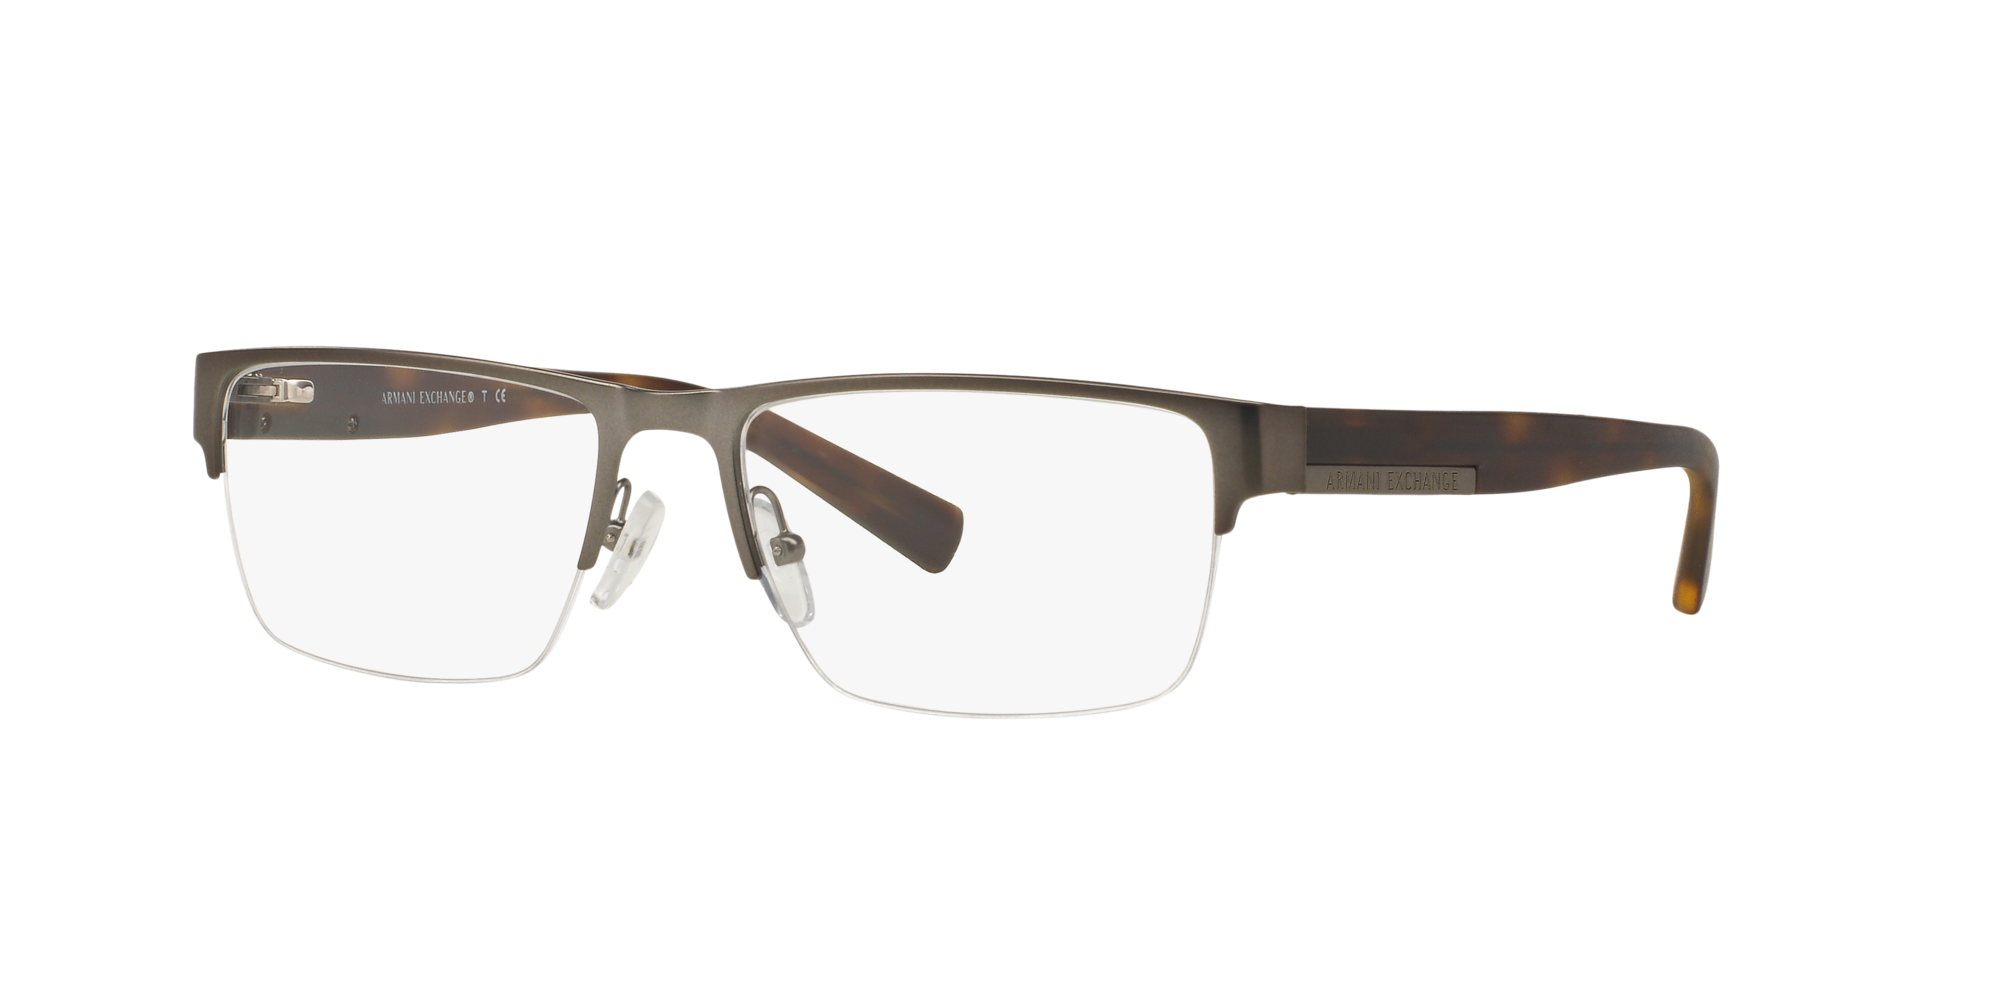 Silver/gunmetal/grey glasses | Target 